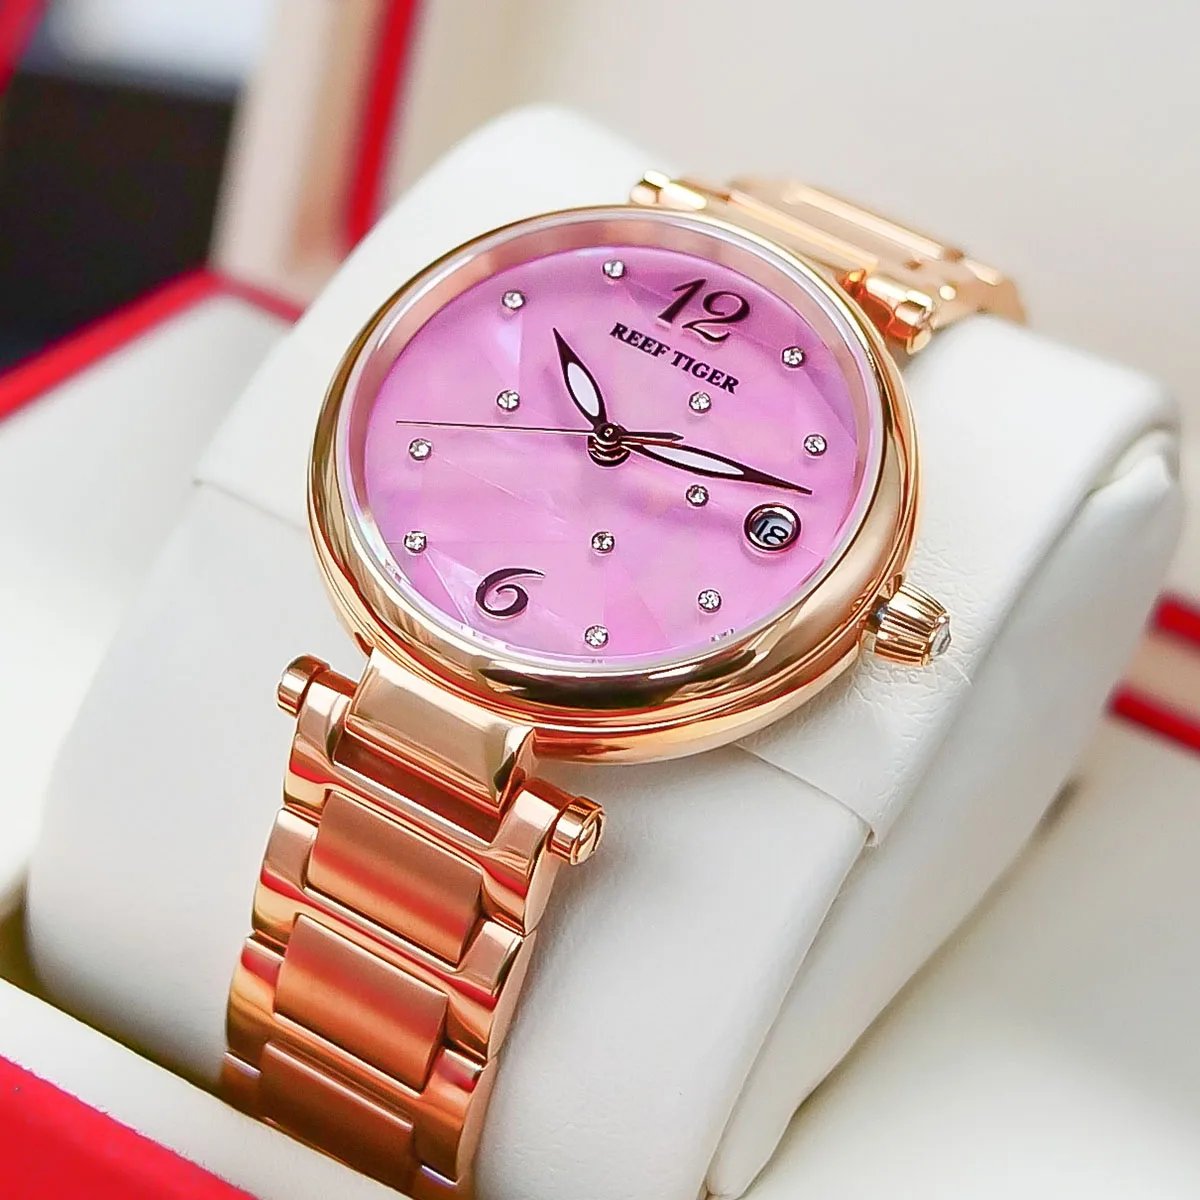 Reef Tiger/ RT Pink Dial Rose Gold Luxury Fashion Diamond Women Watches Stainless Steel Bracelet Mechanical Watch RGA1584 enlarge